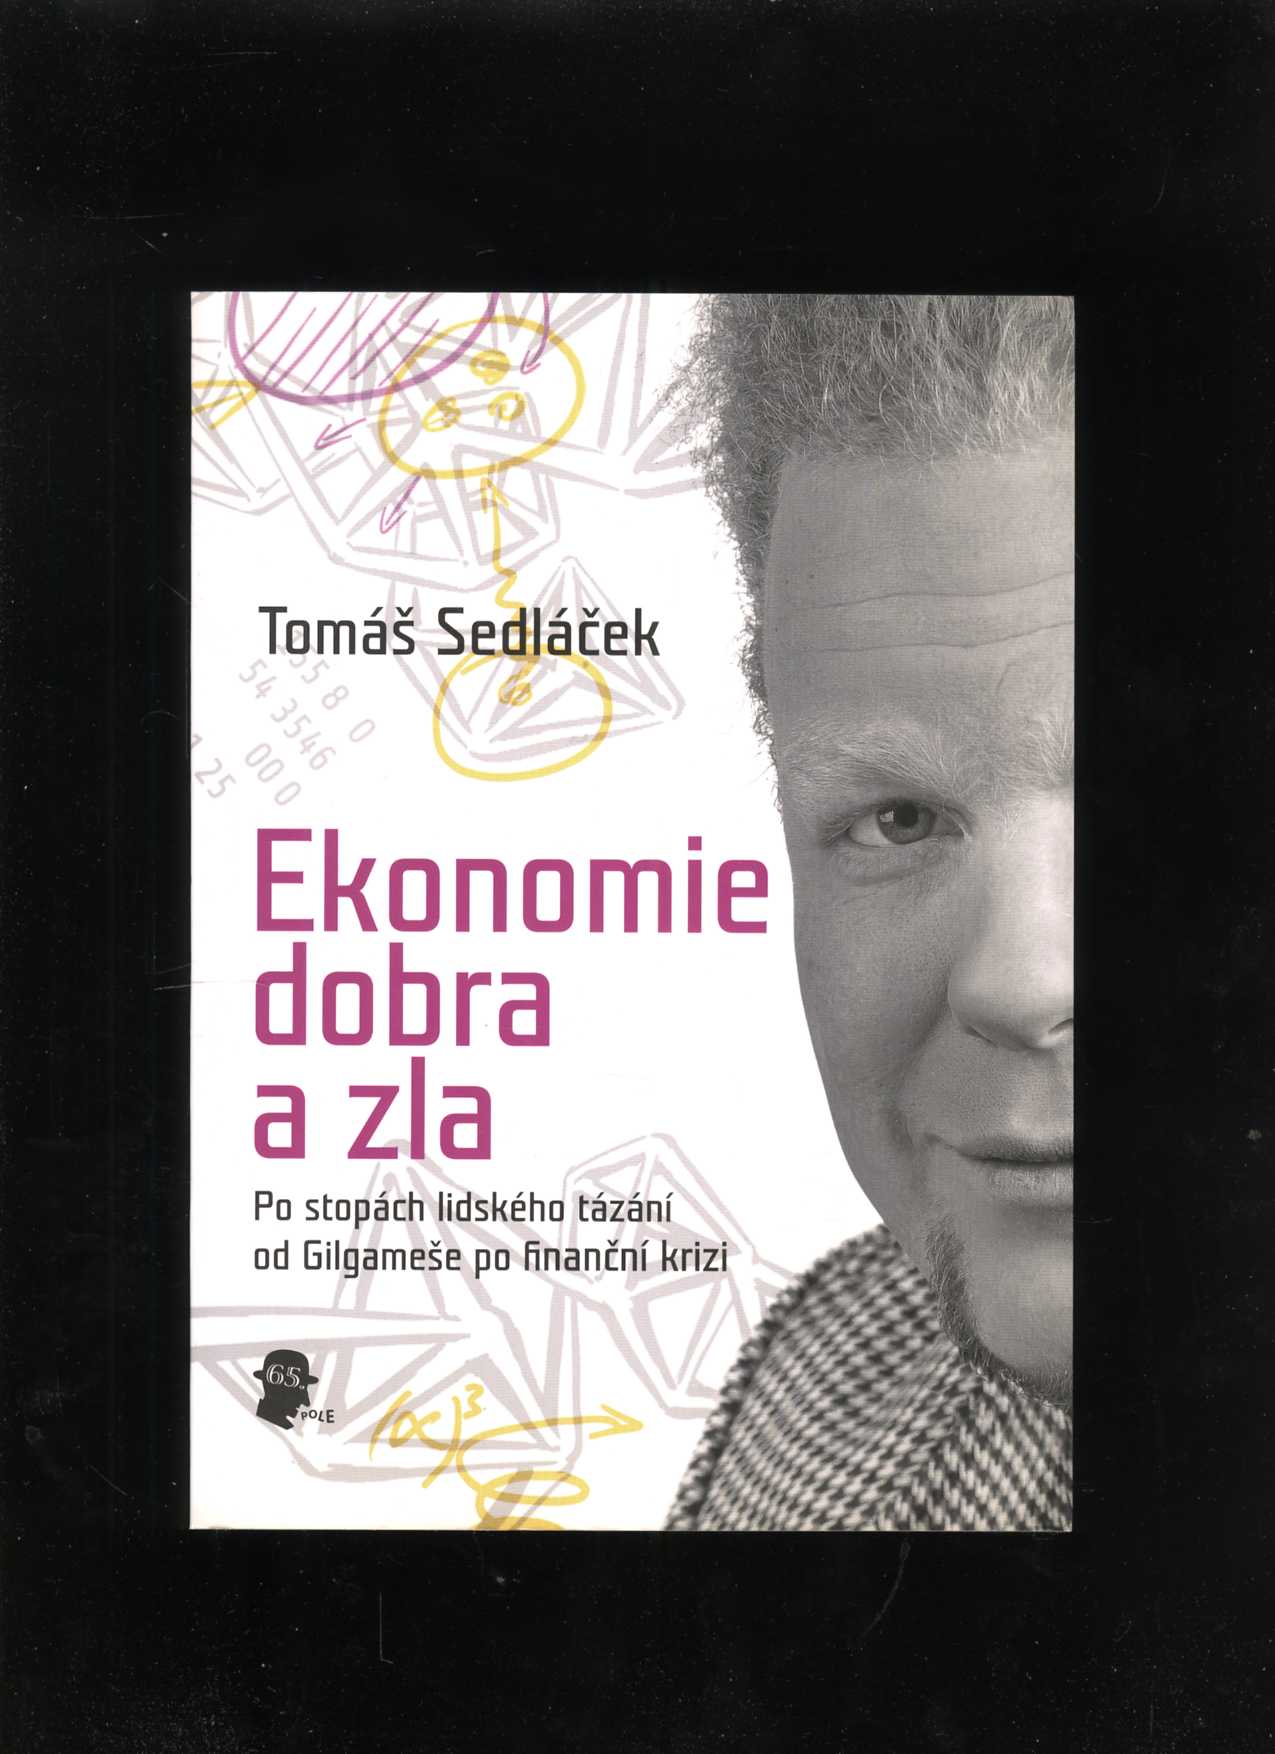 Ekonomie dobra a zla (Tomáš Sedláček)